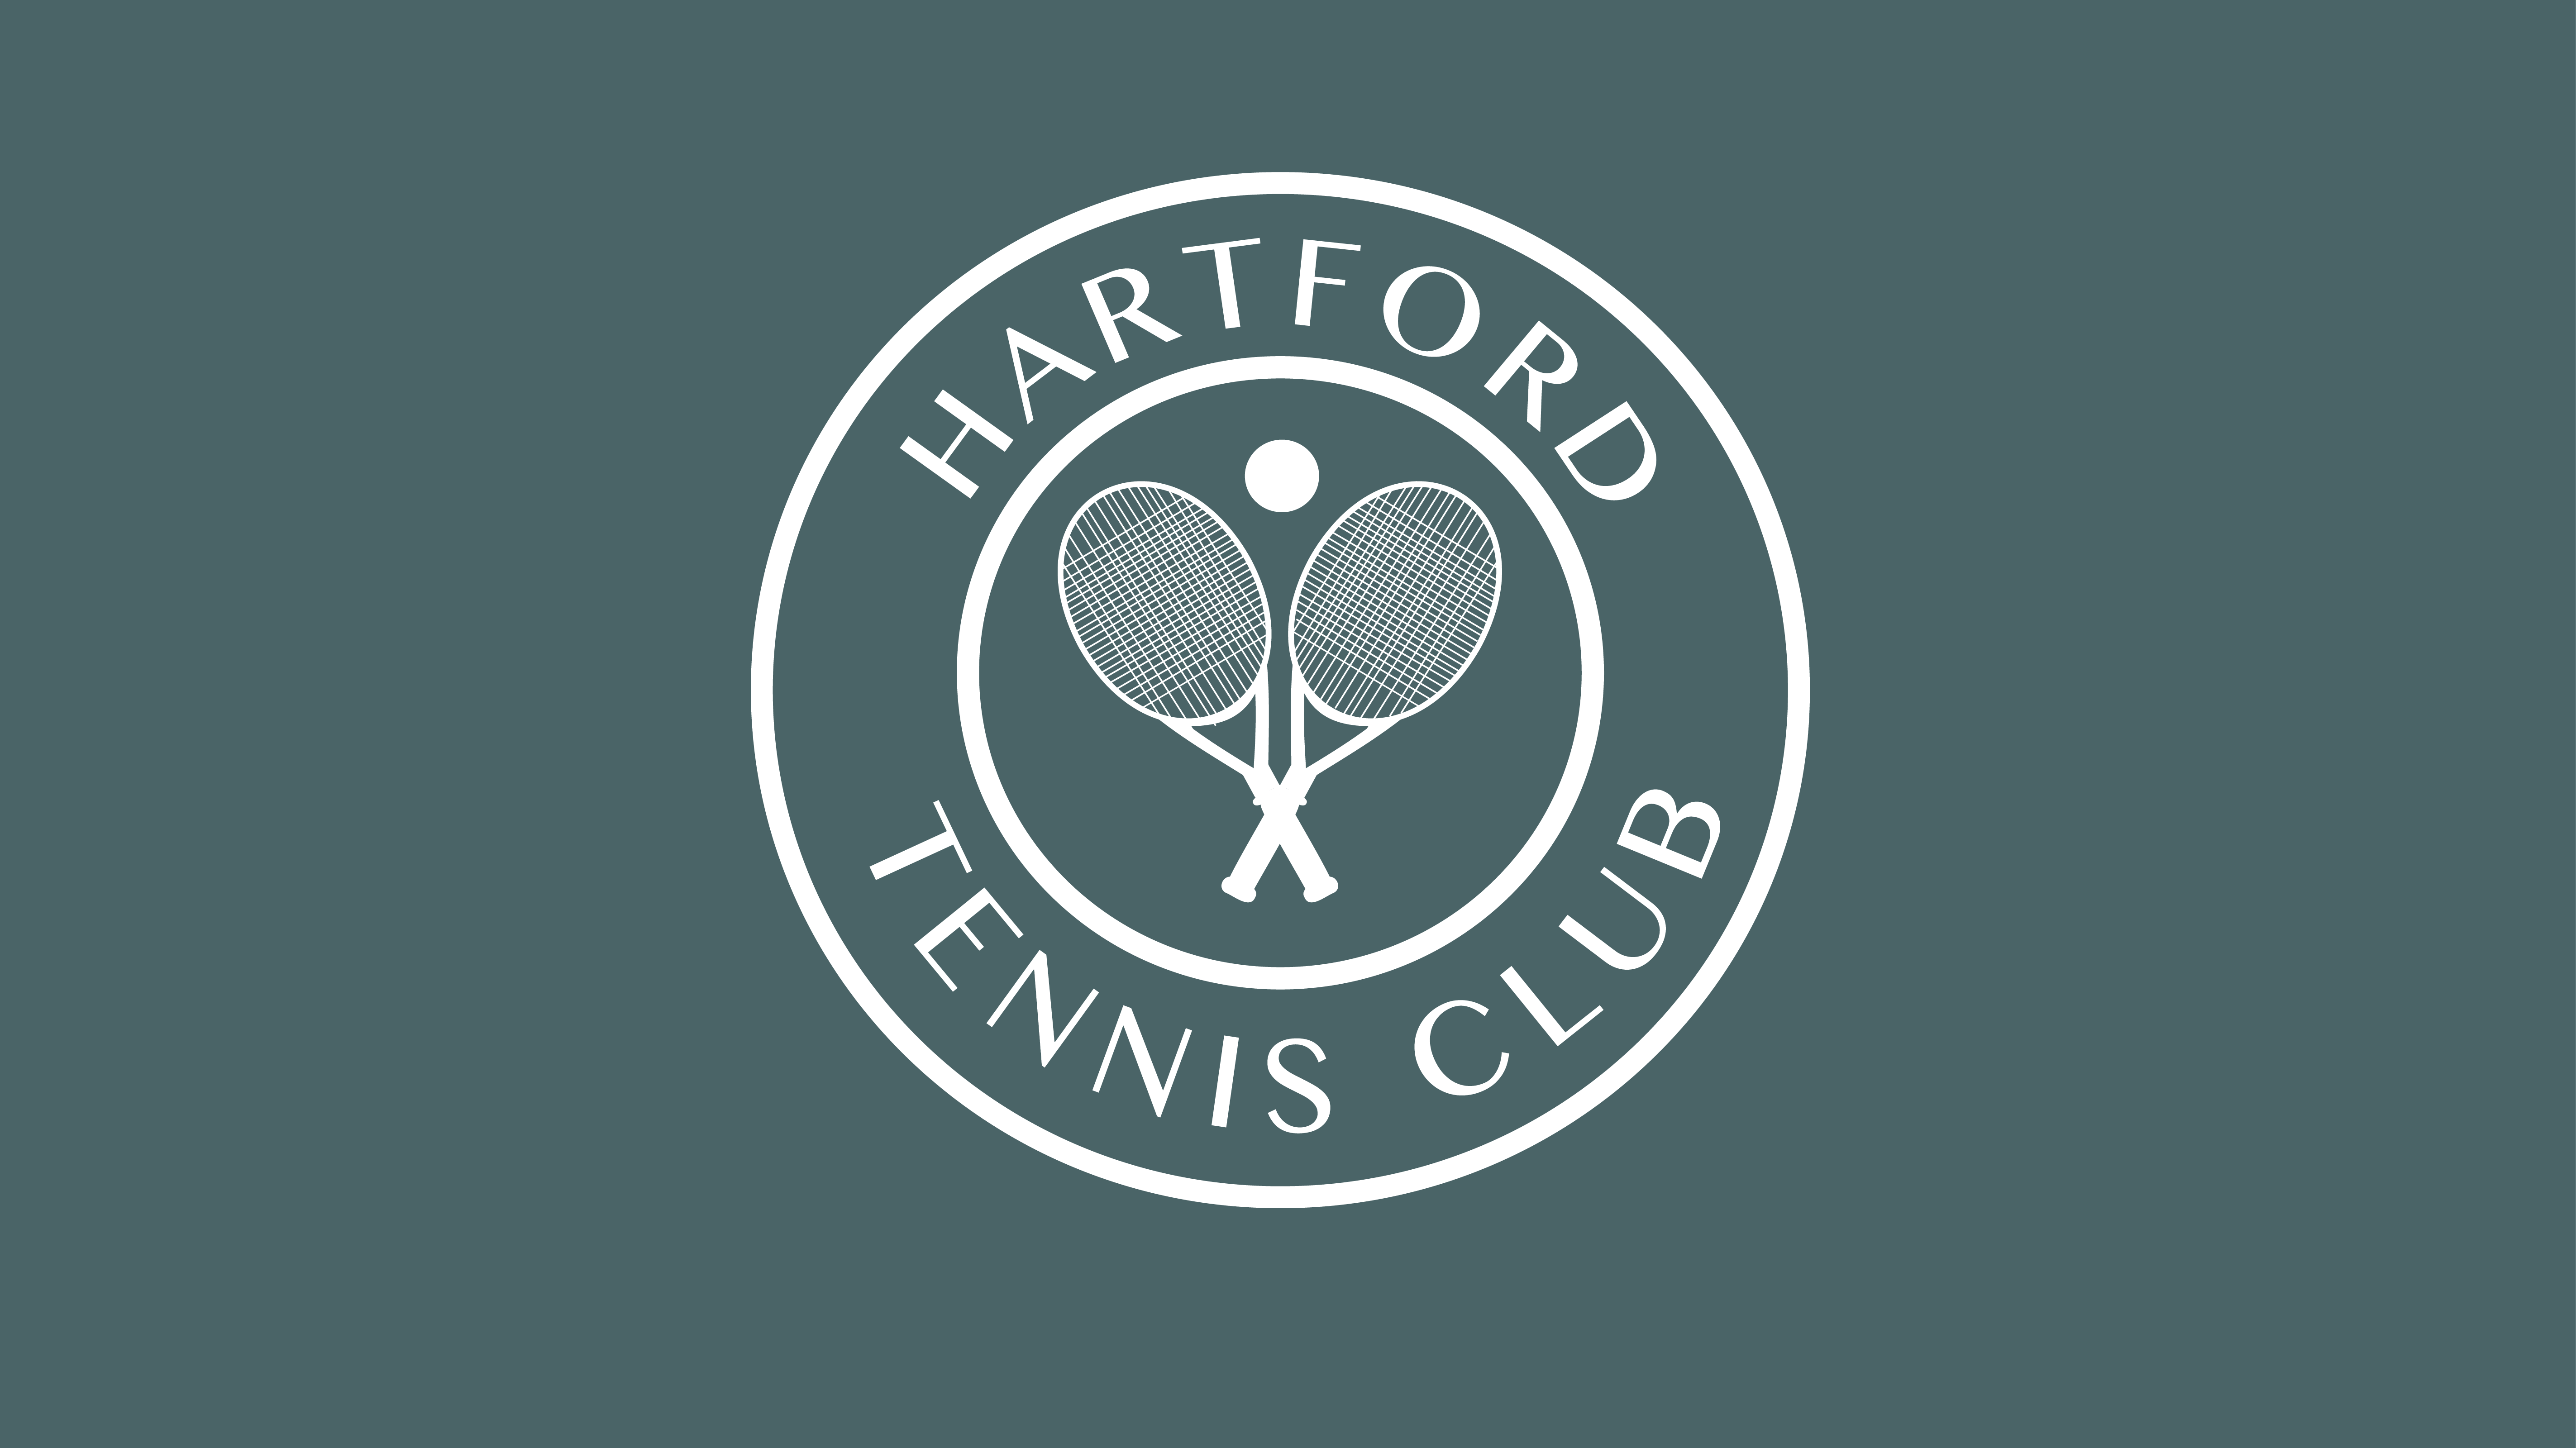 Hartford Tennis Club Inc logo